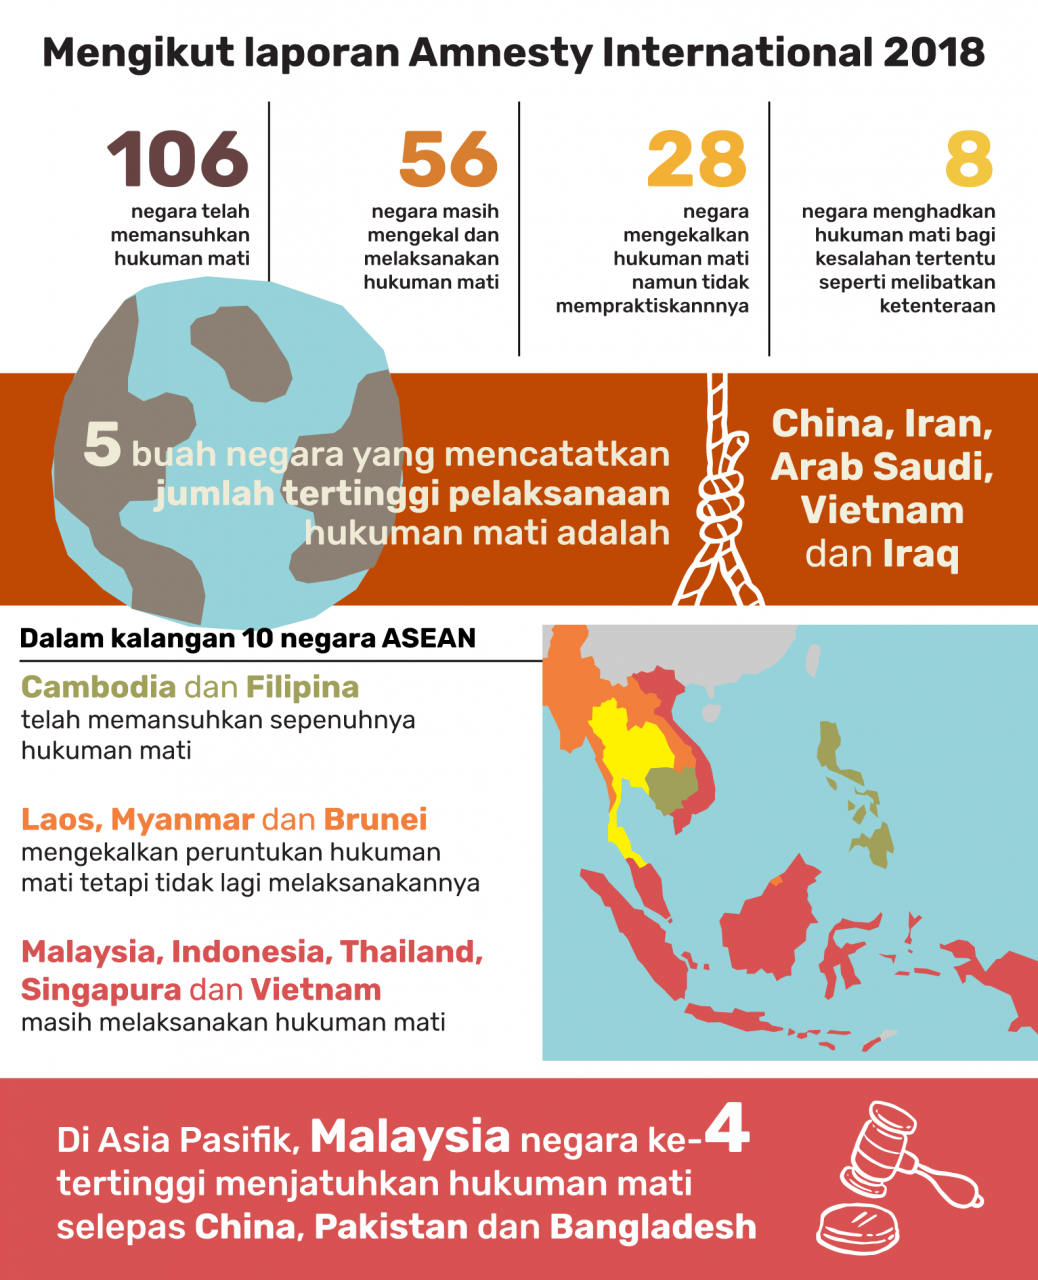 statistik jenayah di malaysia 2018